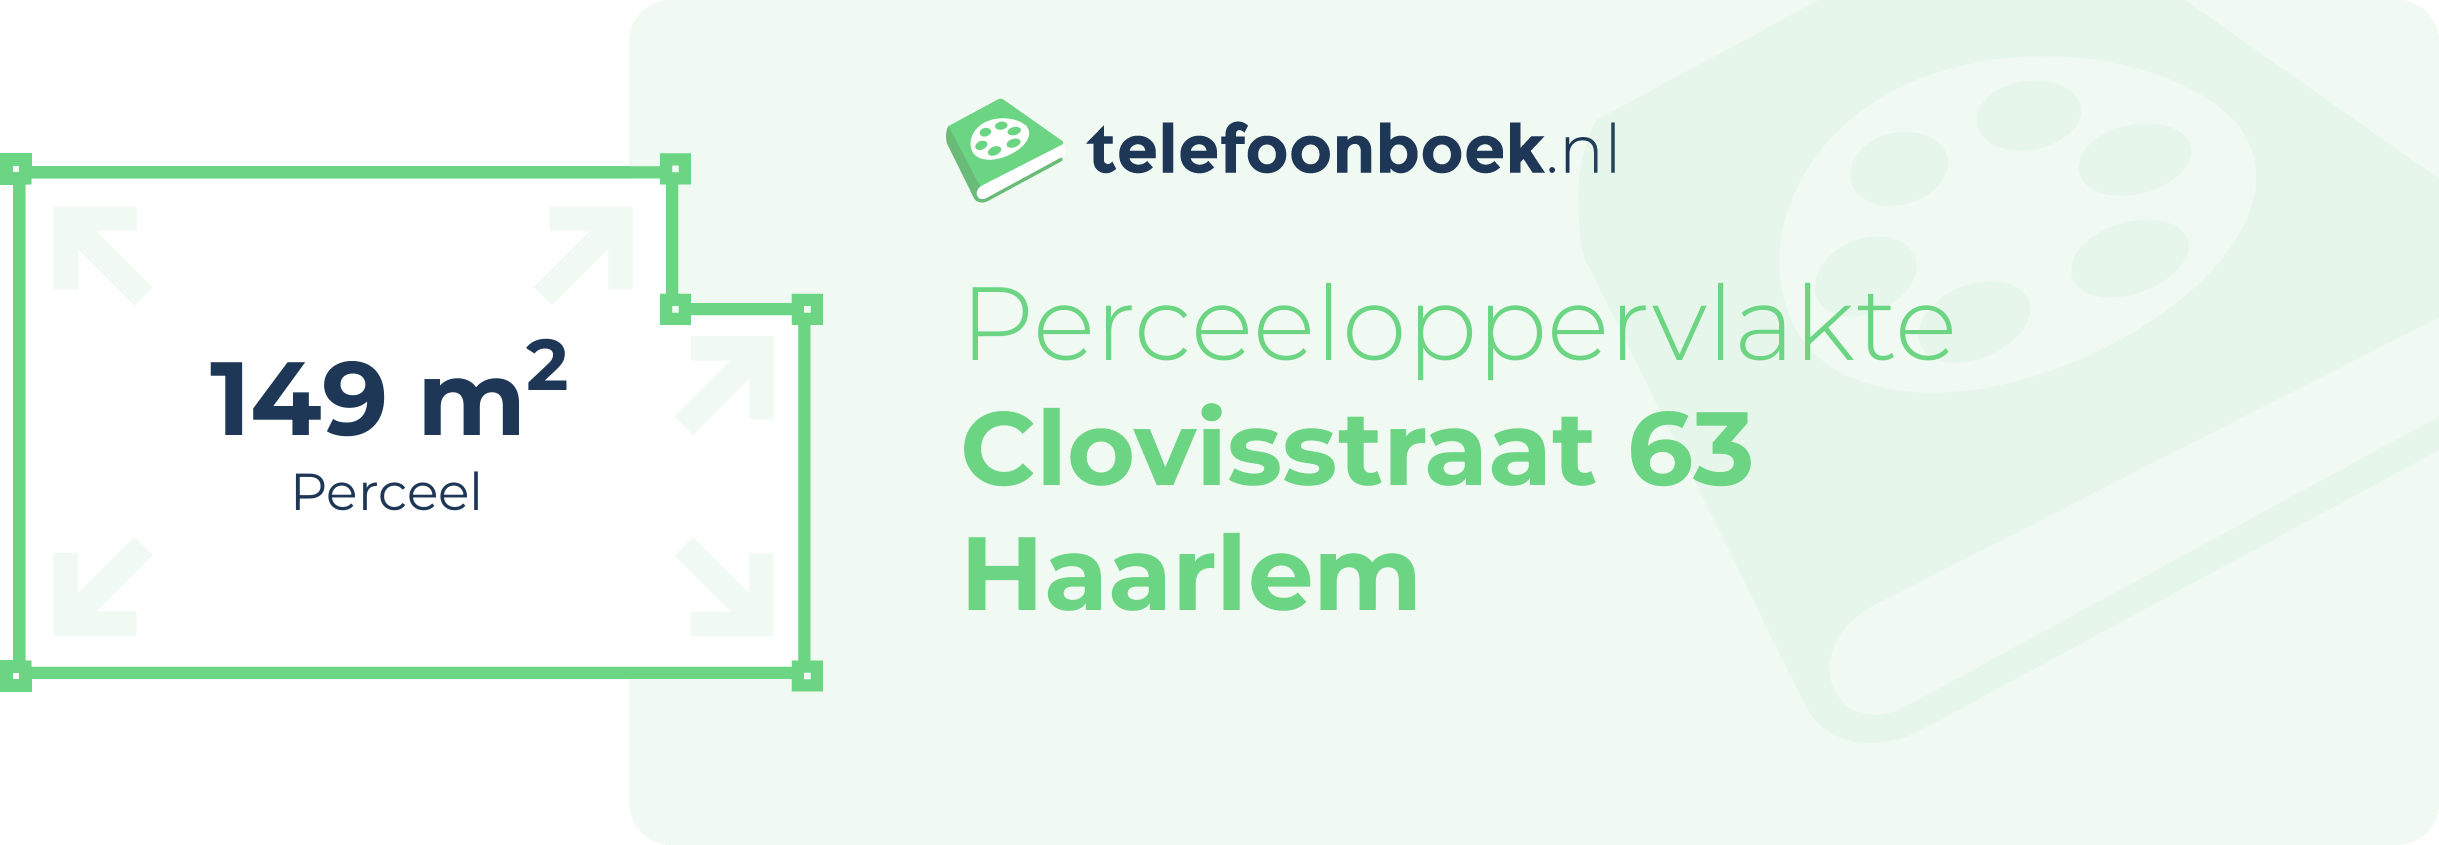 Perceeloppervlakte Clovisstraat 63 Haarlem